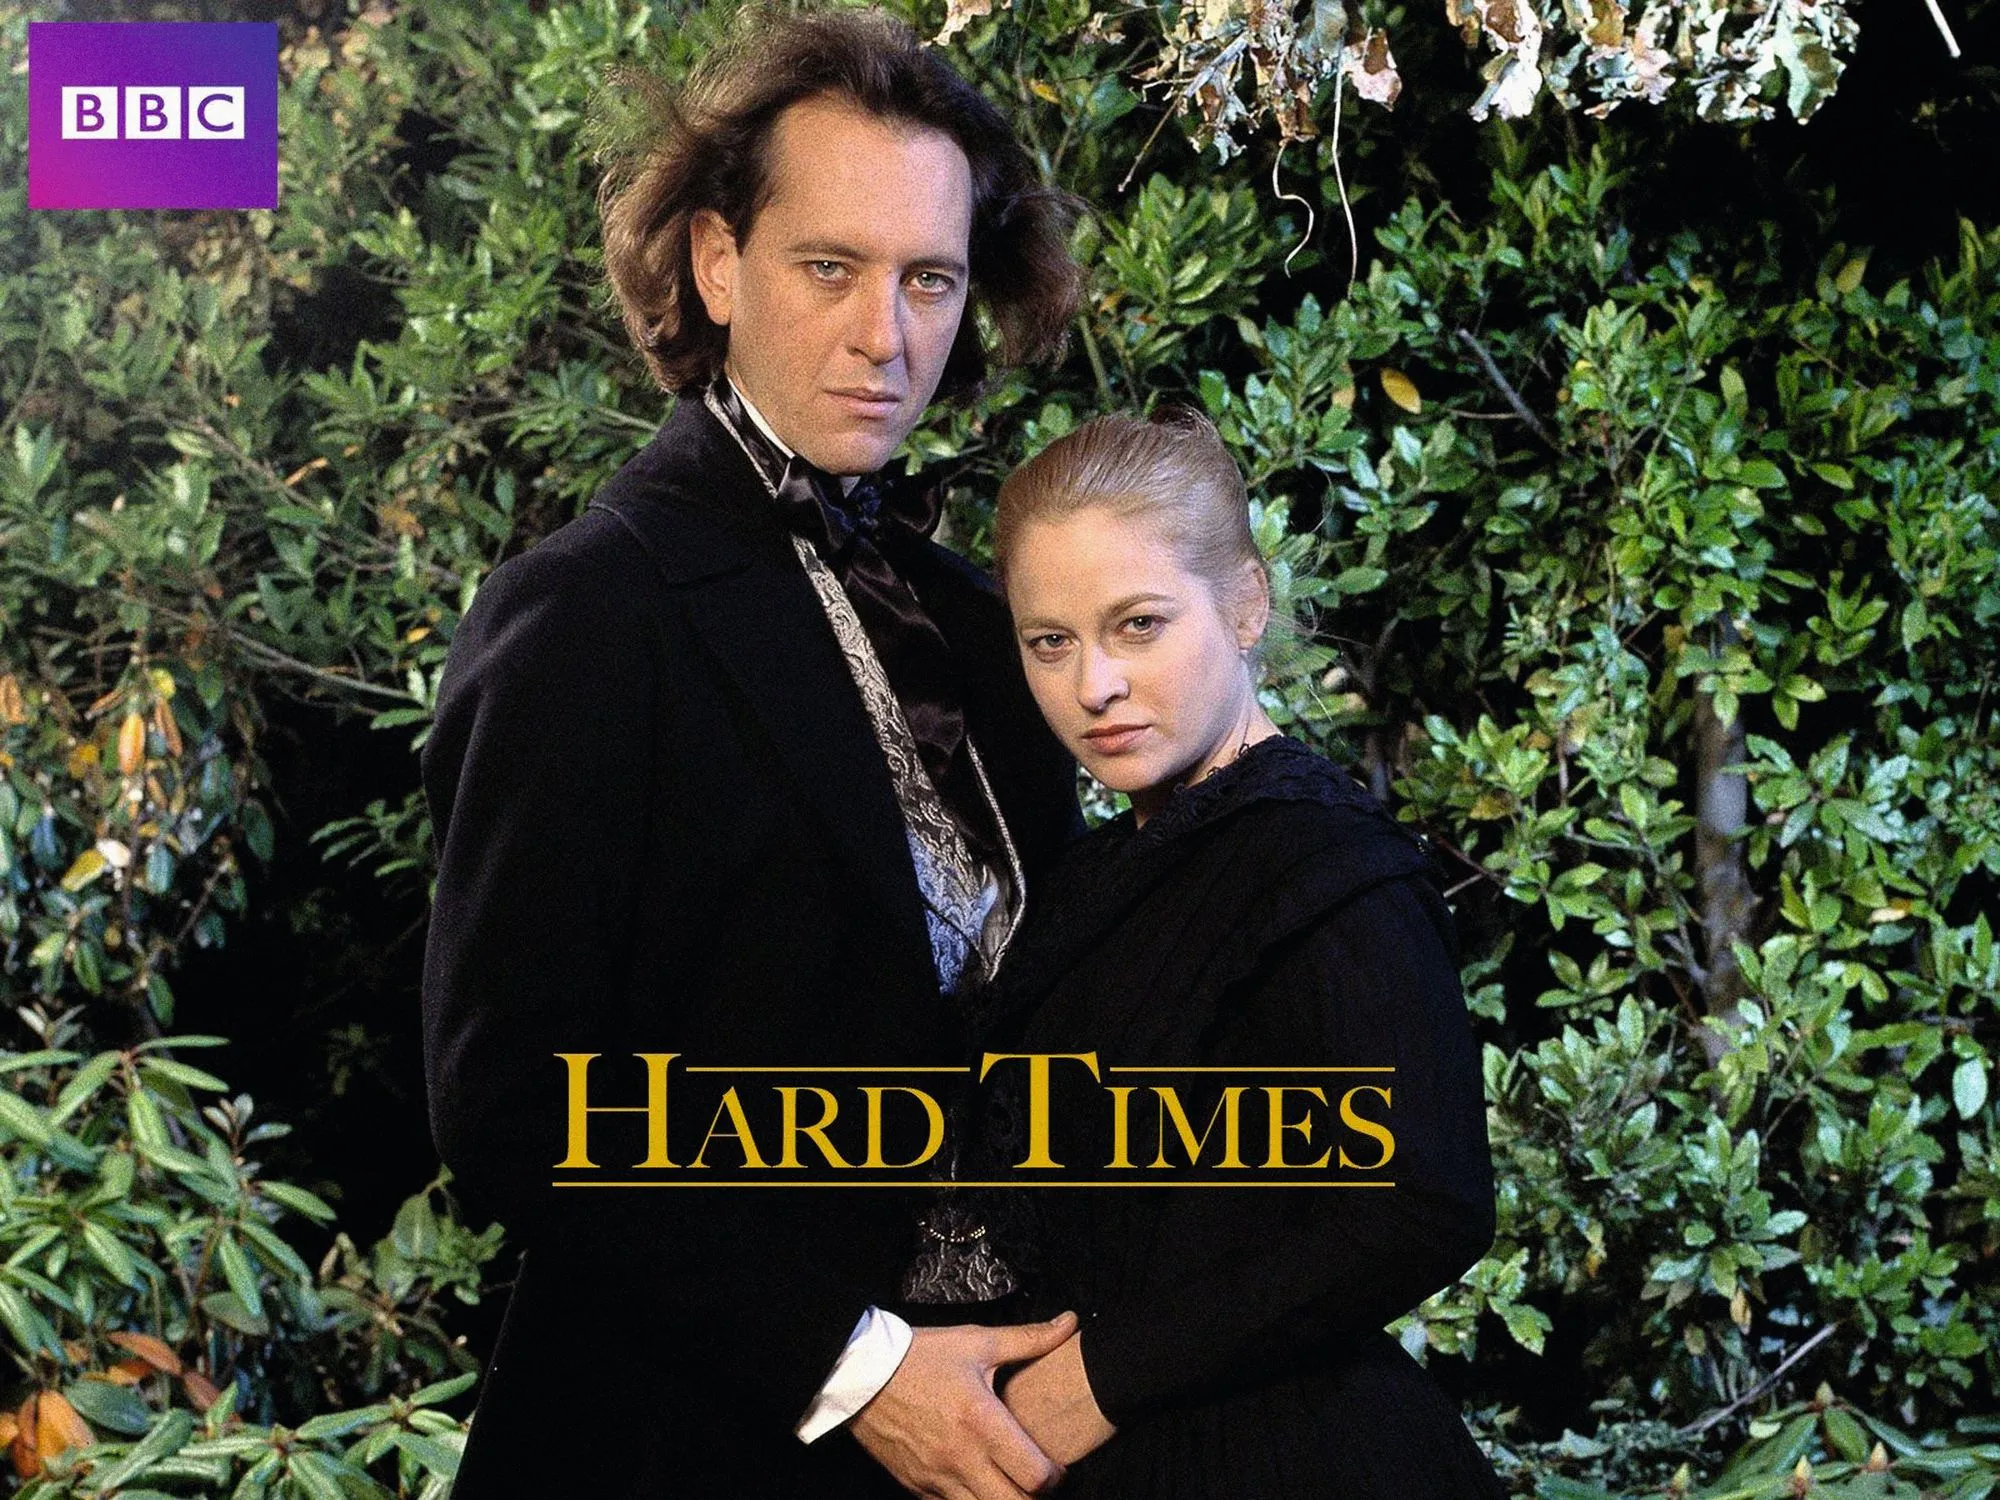 Hard Times, British Broadcasting Corporation, 1994.